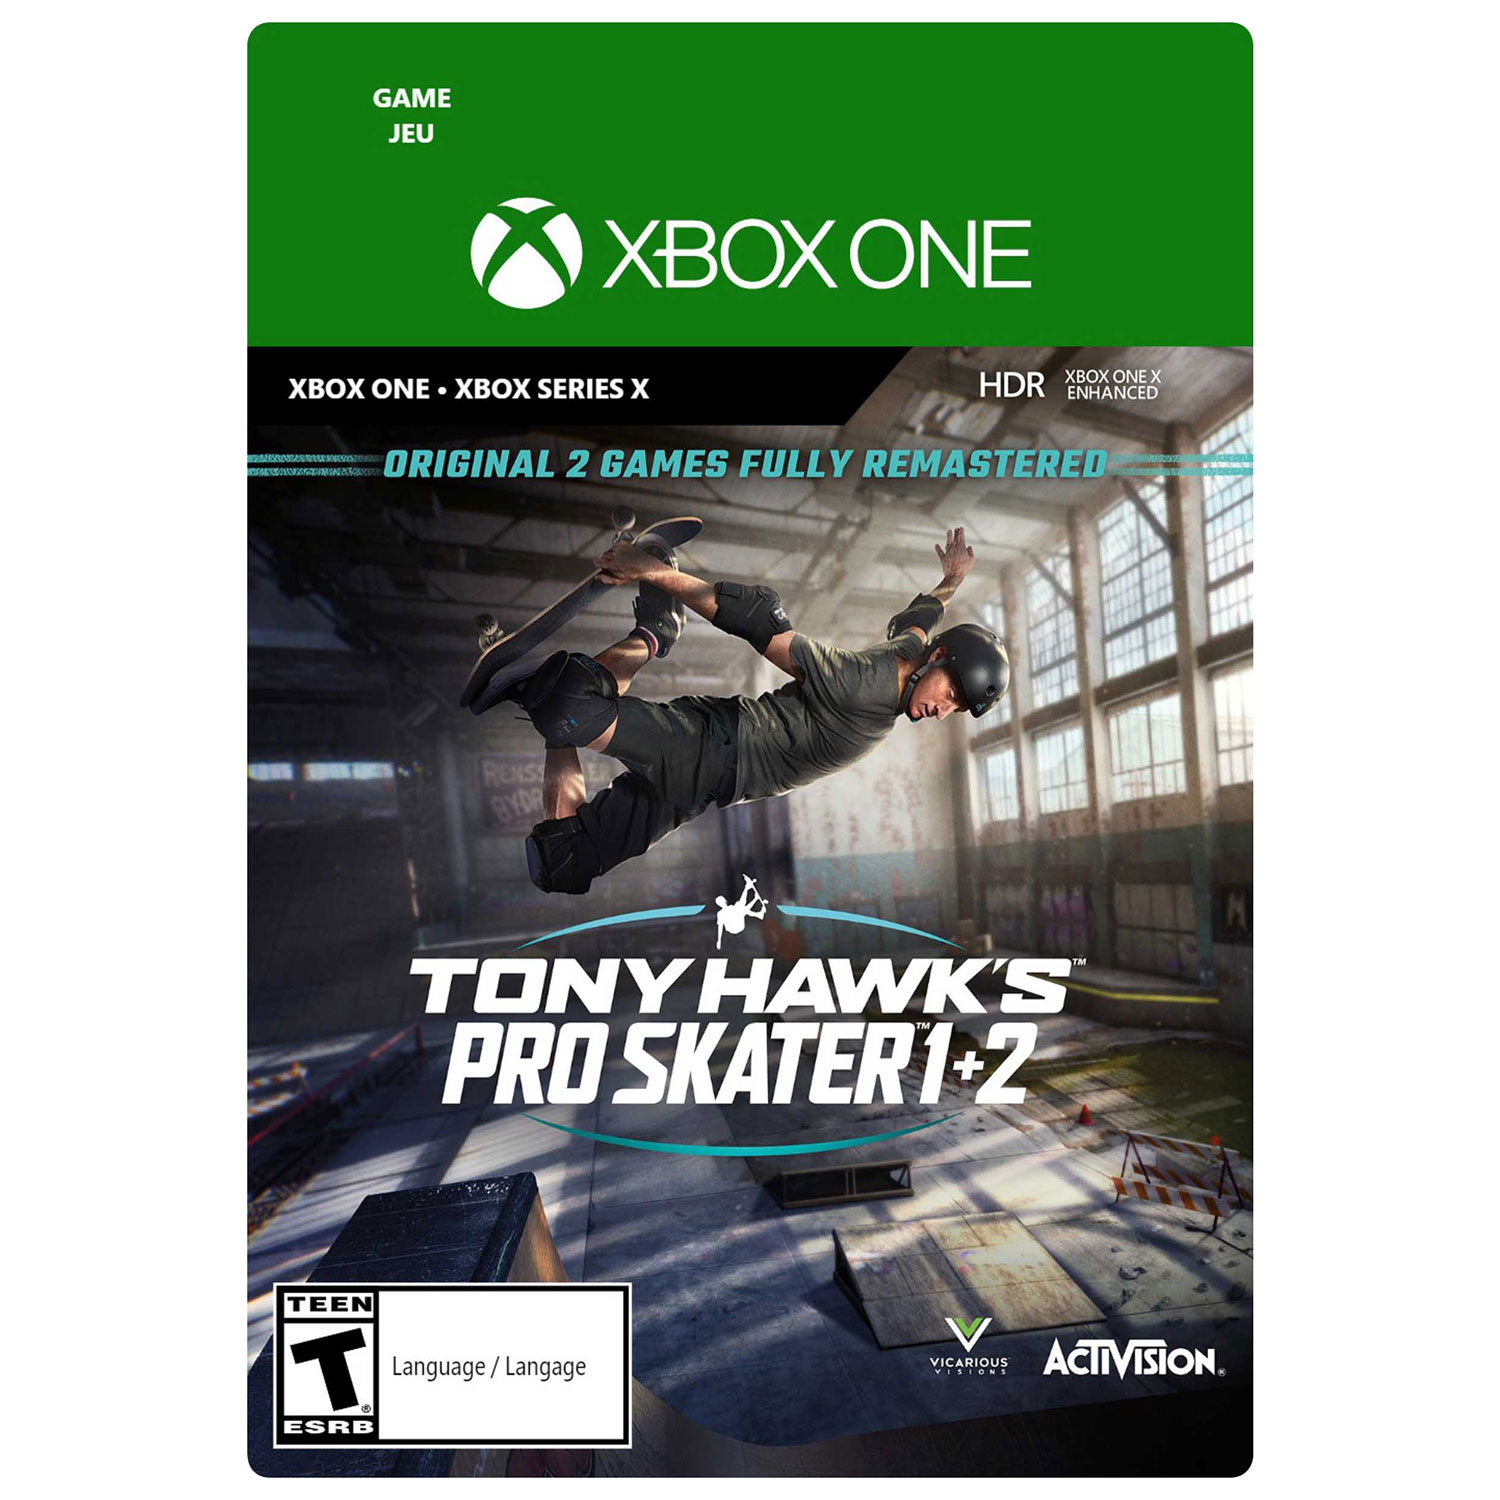 Tony Hawk's Pro Skater 1 + 2 (Xbox One / Xbox Series X) - Digital Download